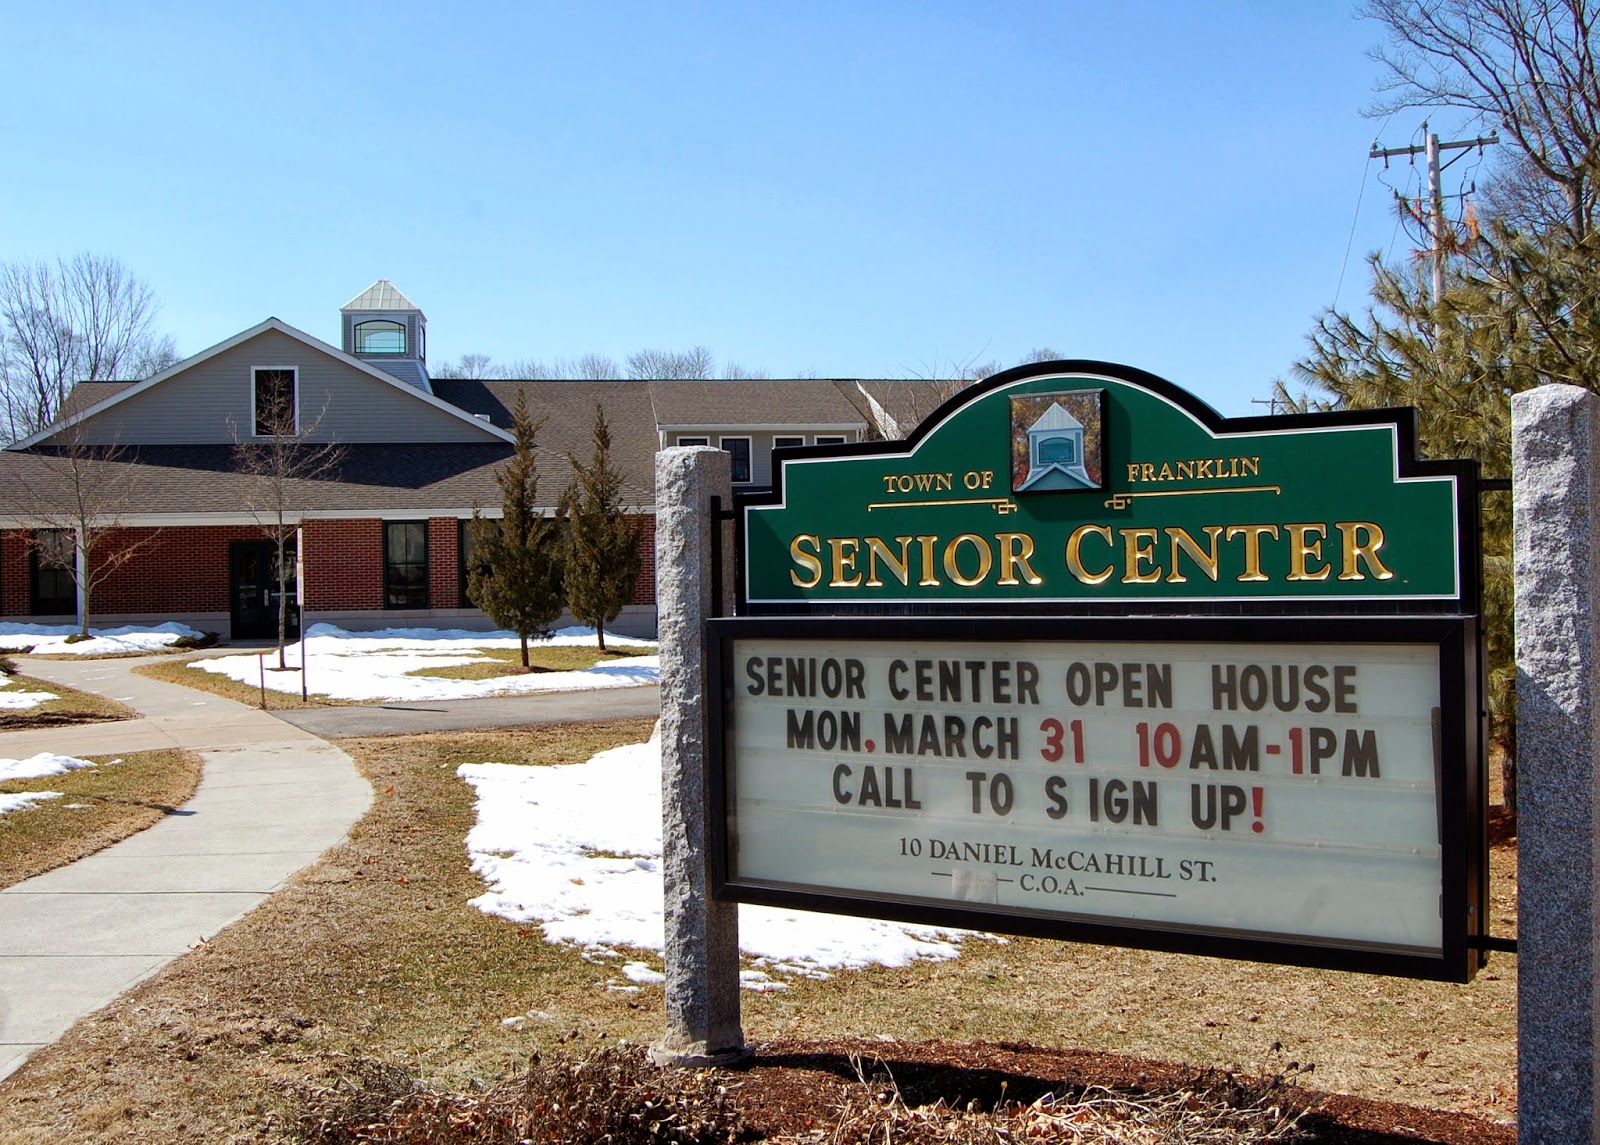 Franklin Senior Center - Open House - March 31, 2014